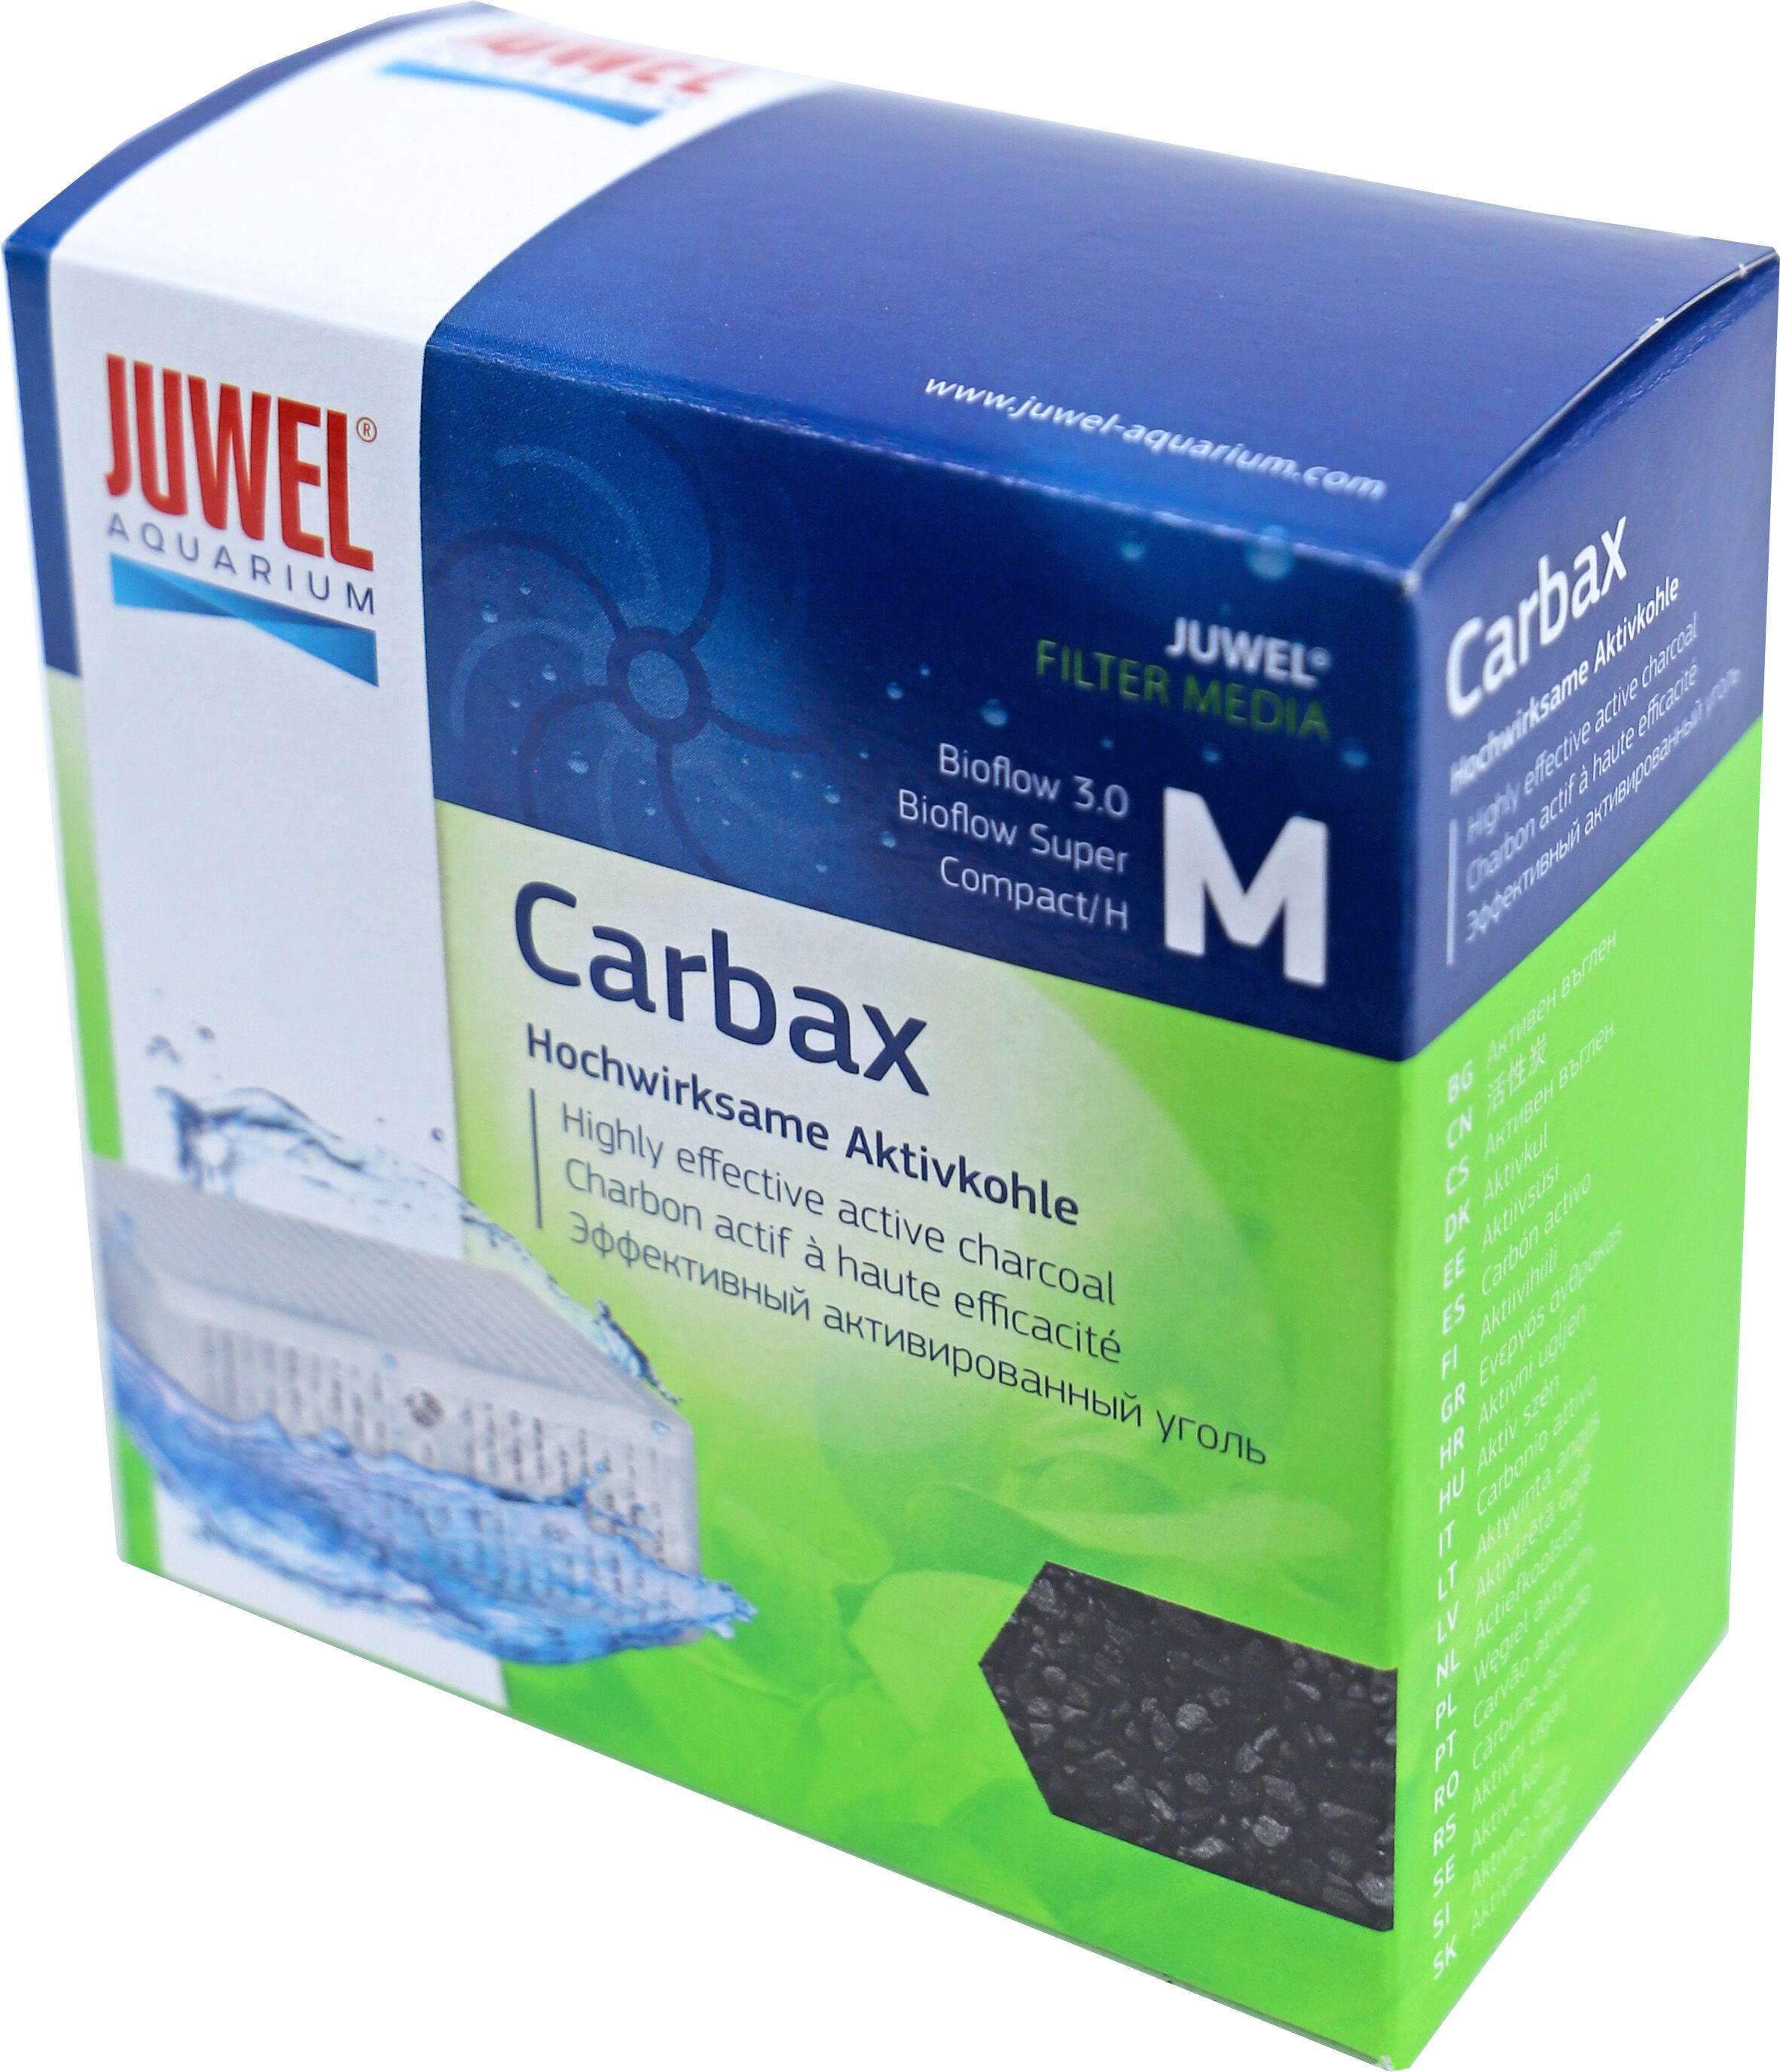 Carbax Bioflow M 3.0/Compact